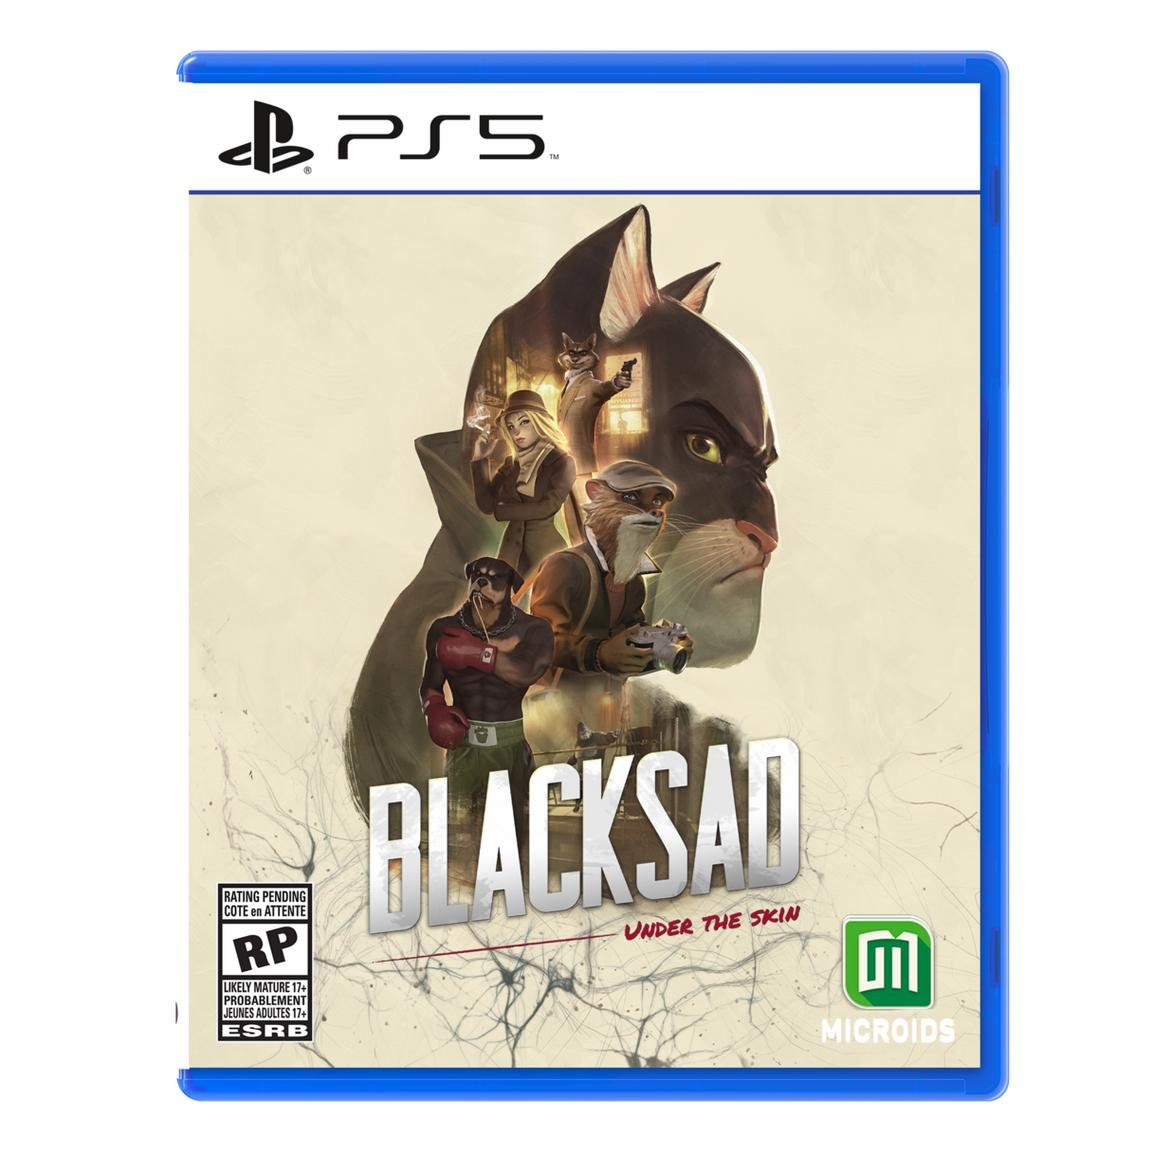 BlackSad: Under the Skin (PS5) is up for preorder on Amazon ($19.99) amzn.to/43SzX3t

Best Buy PS5/XSX bit.ly/3TLjlax
GameStop bit.ly/3Ud3hOJ 
Target bit.ly/4aRBnNW
Walmart bit.ly/3Q0WG7z #ad